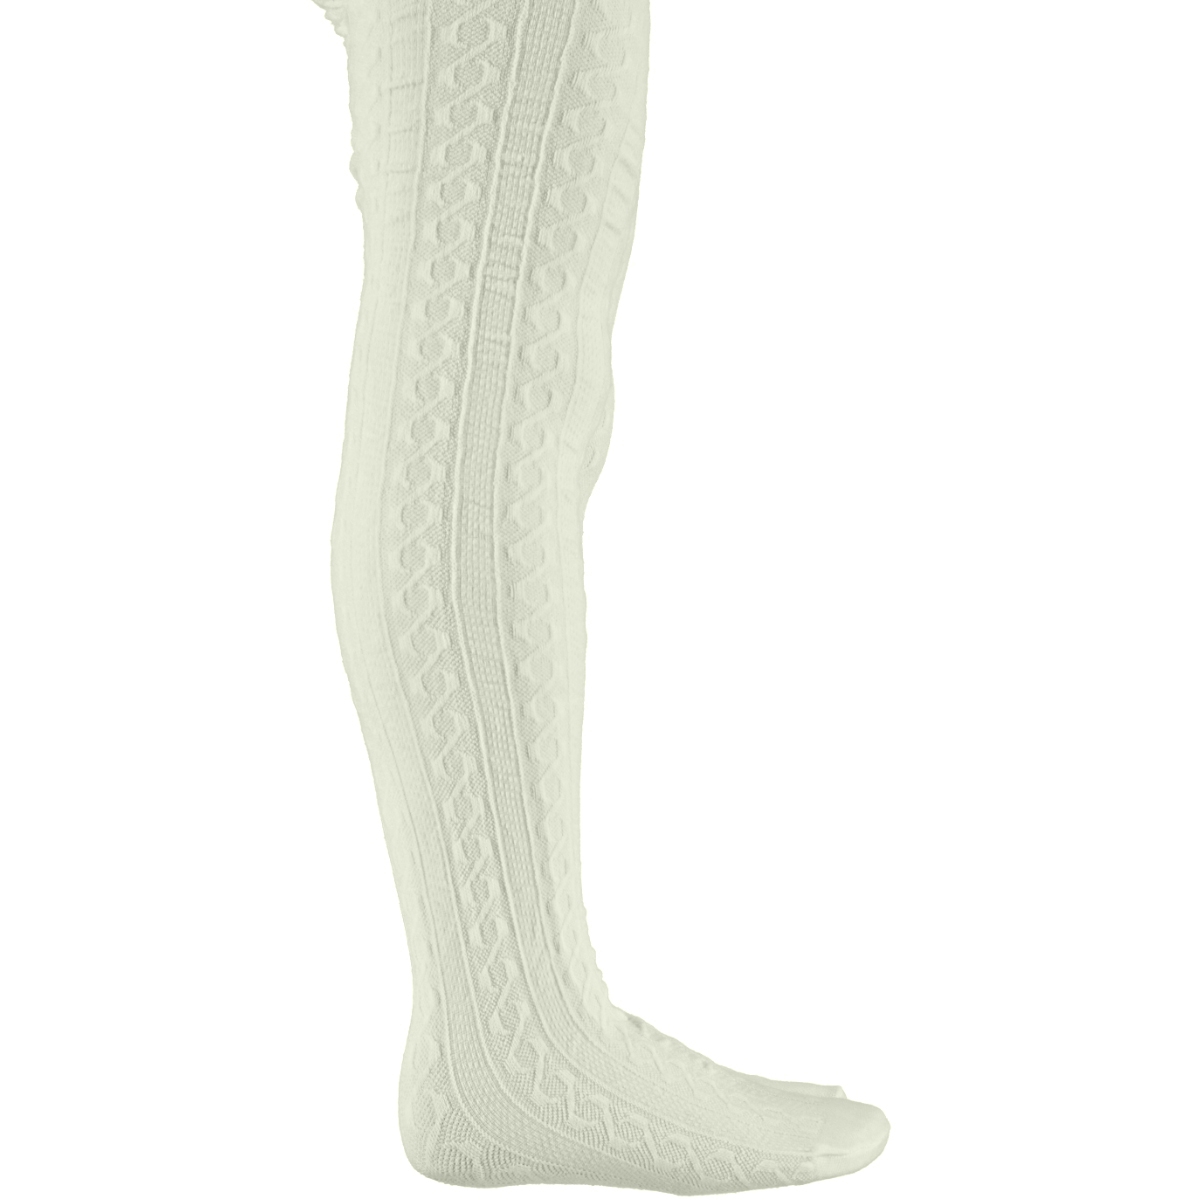 Bella Calze Triko Külotlu Çorap 2-14 Yaş Ekru